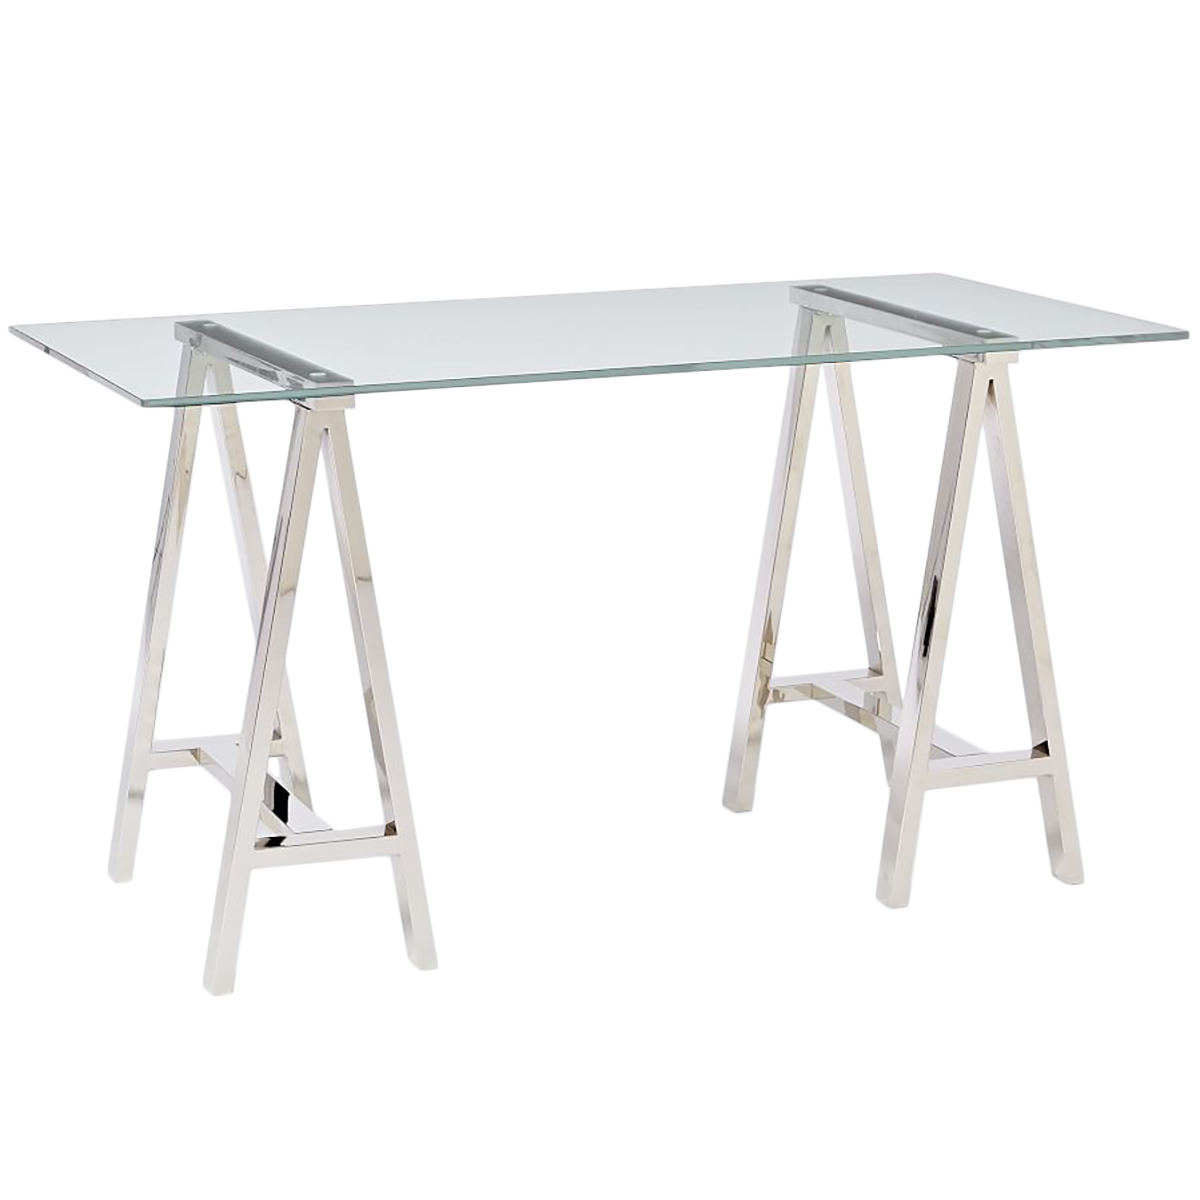 Sky Blue Furniture Stainless Steel Glass Venus Desk Reviews